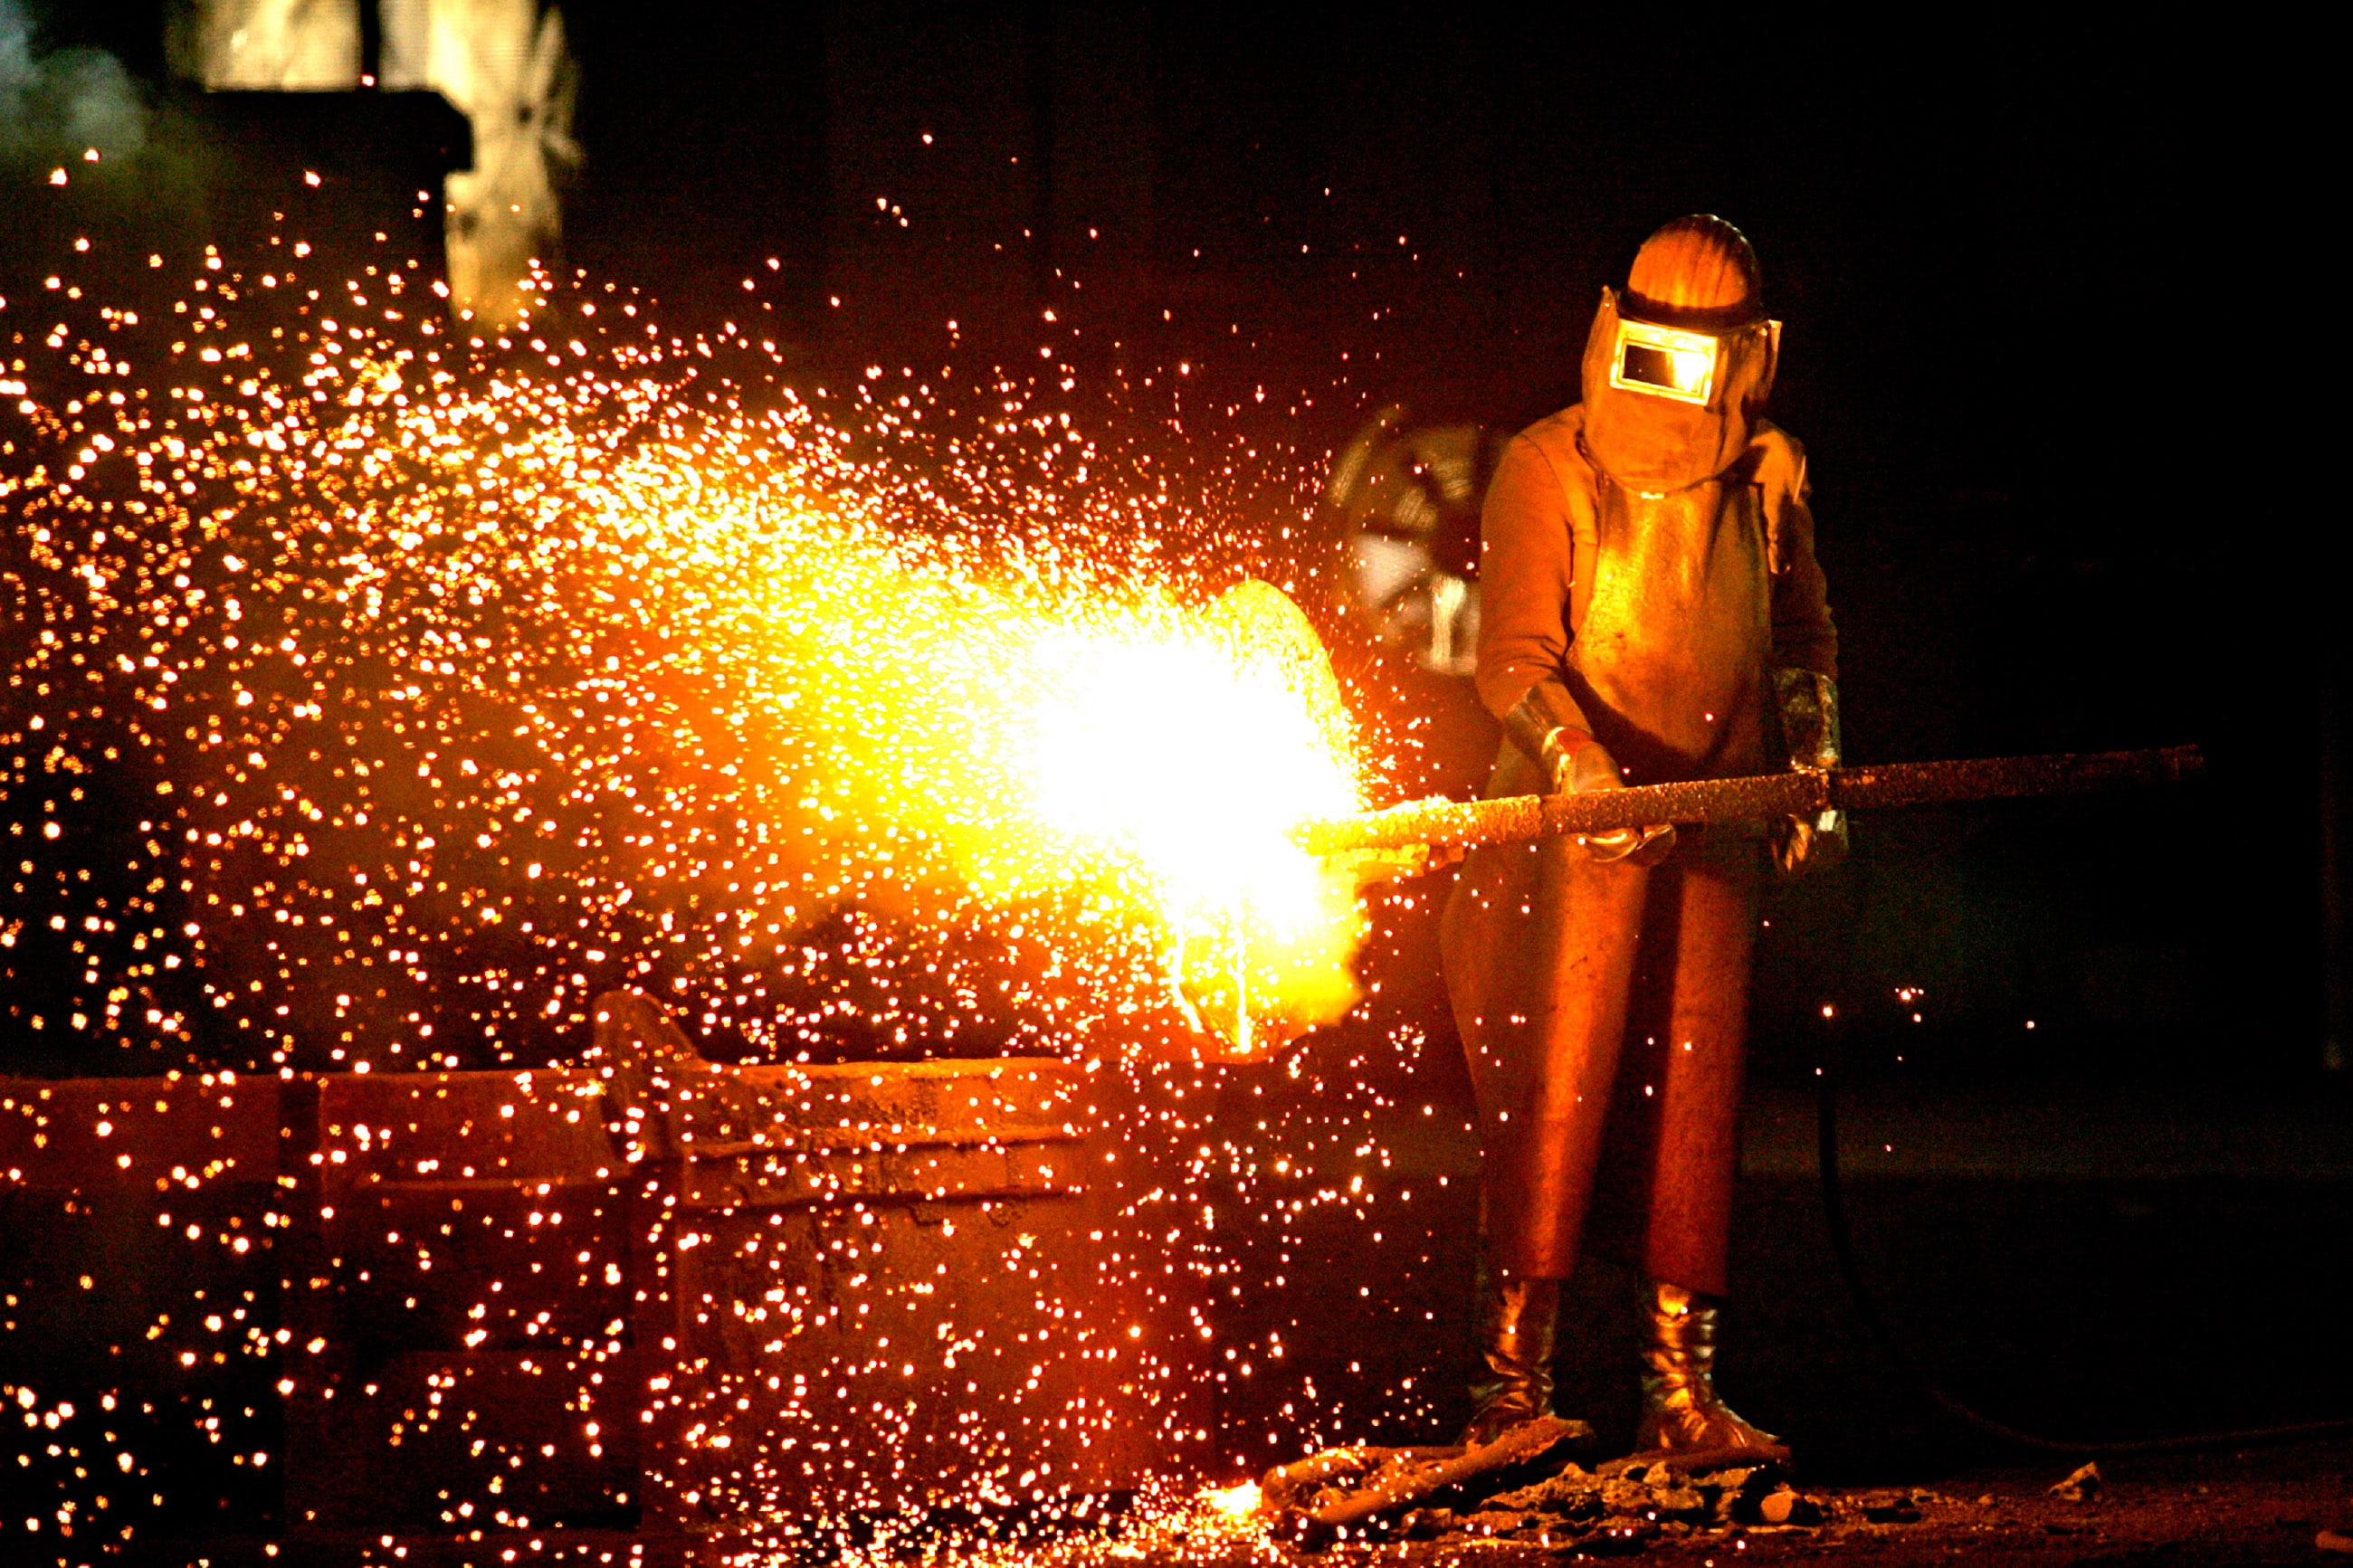 Steel industry worker safety